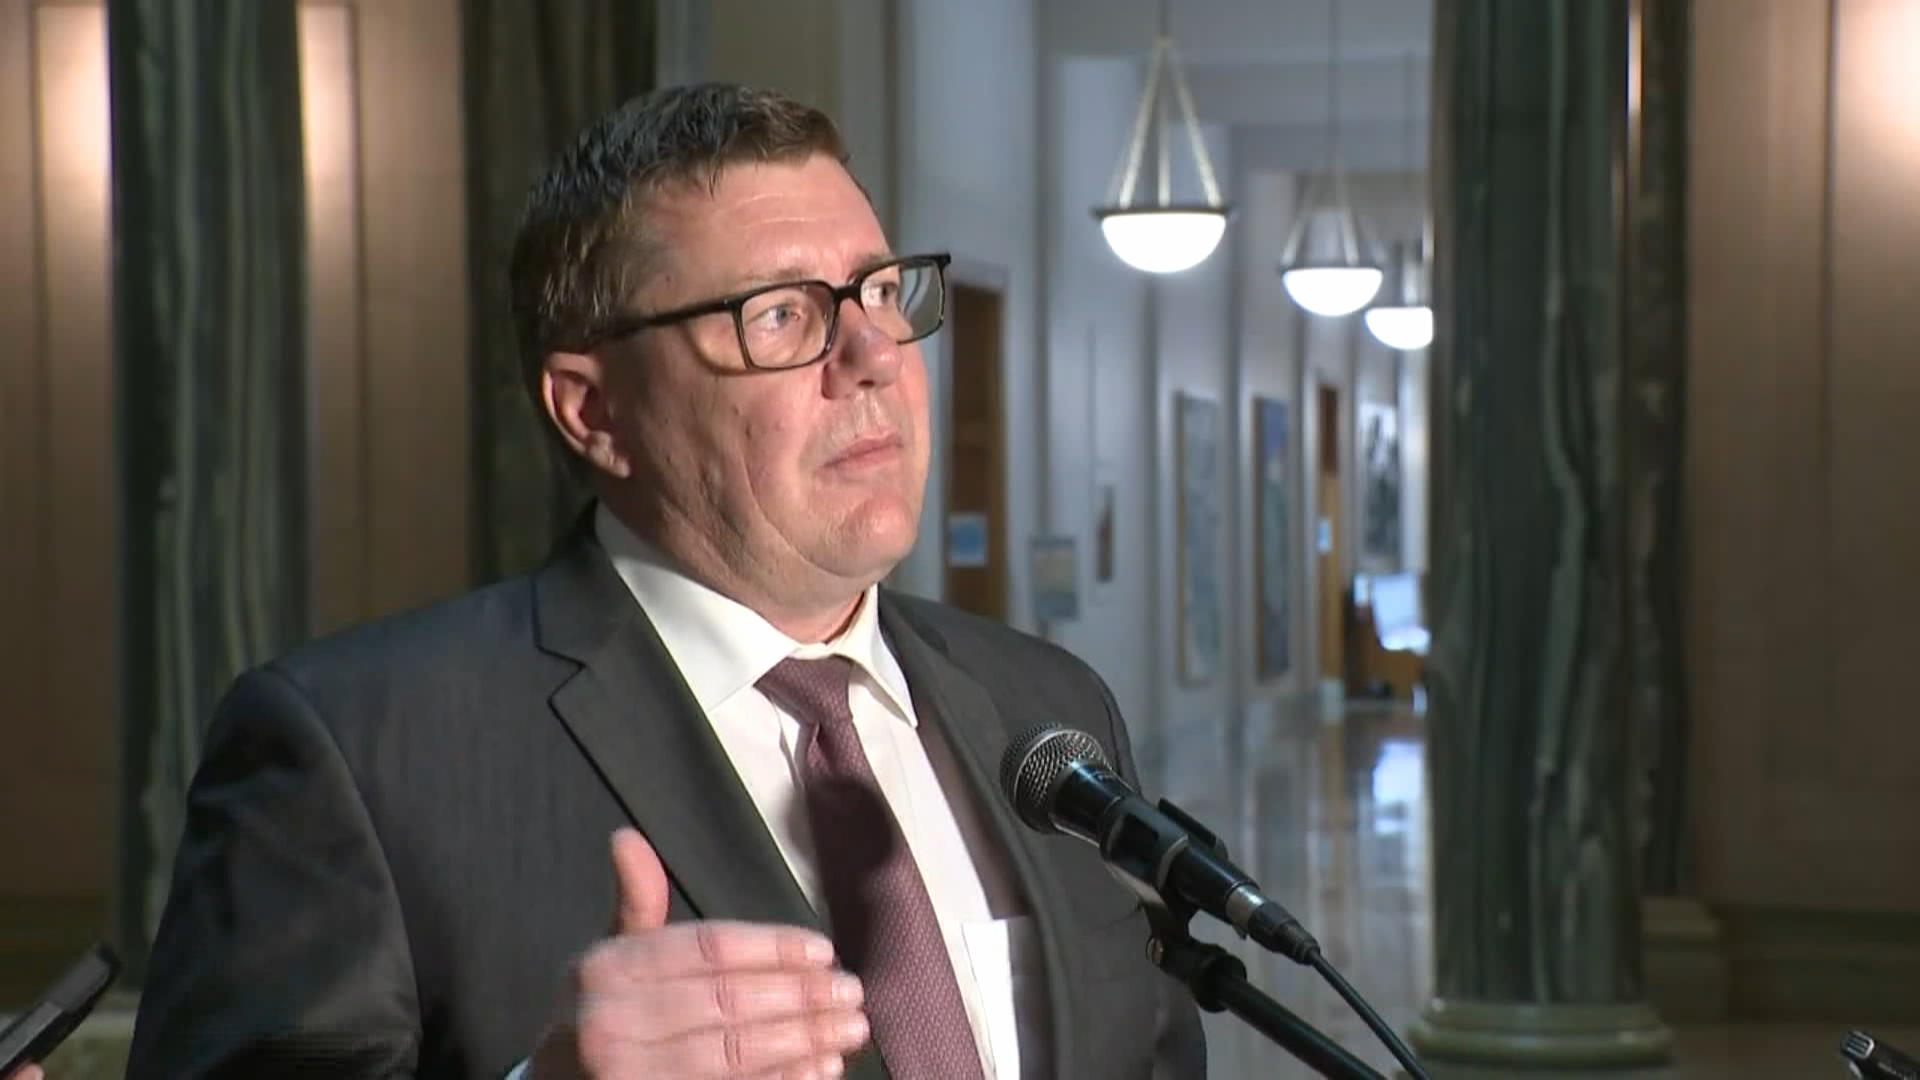 ‘A swing and a miss’: Saskatchewan premier comments on federal budget, deficit